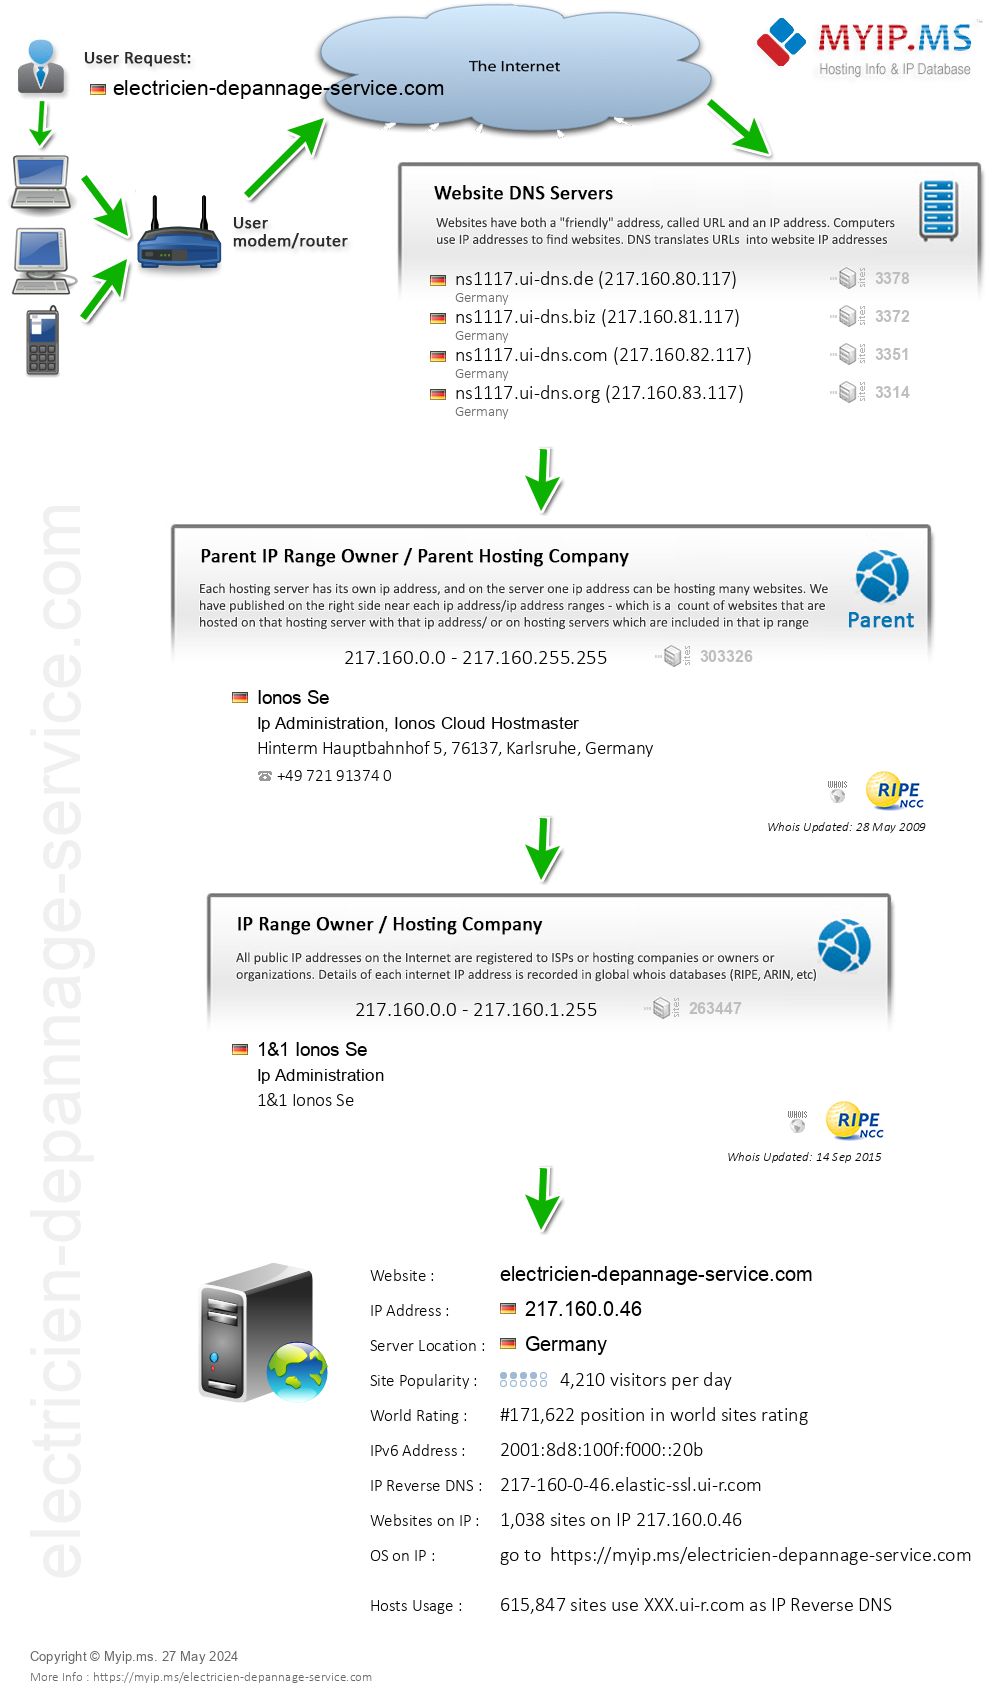 Electricien-depannage-service.com - Website Hosting Visual IP Diagram